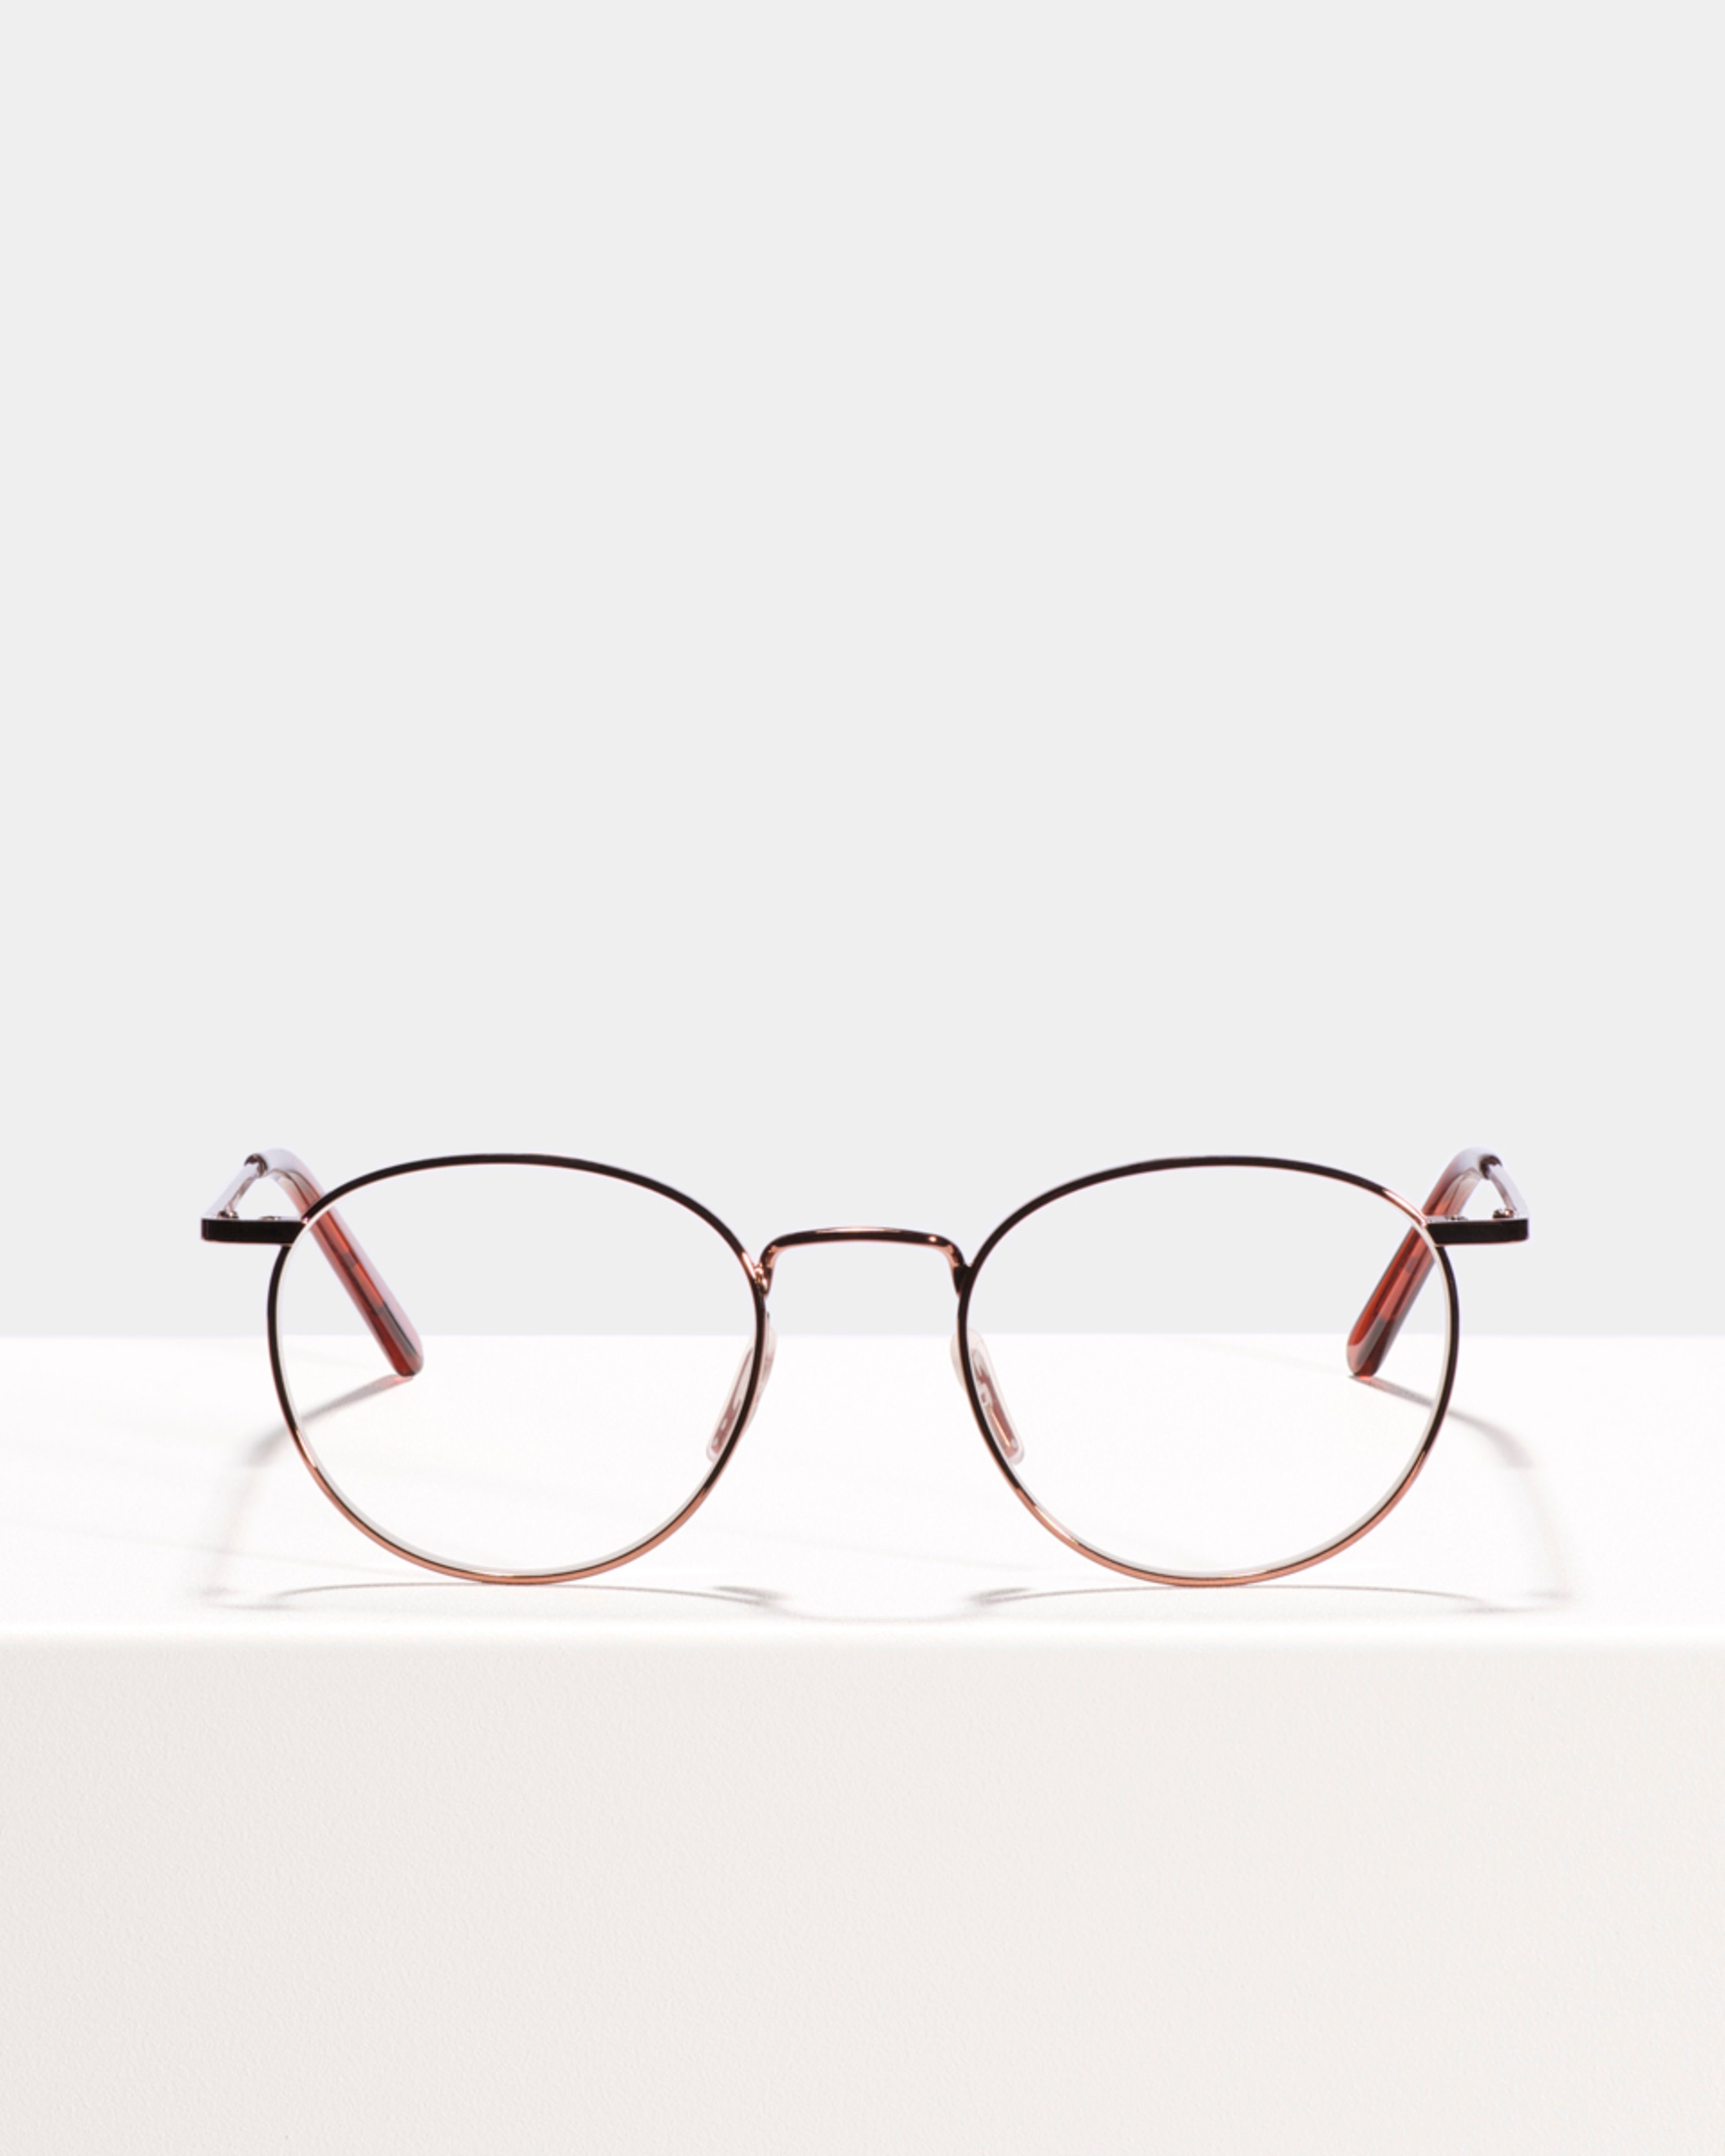 Ace & Tate Glasses | rund Metall in Braun, Rot